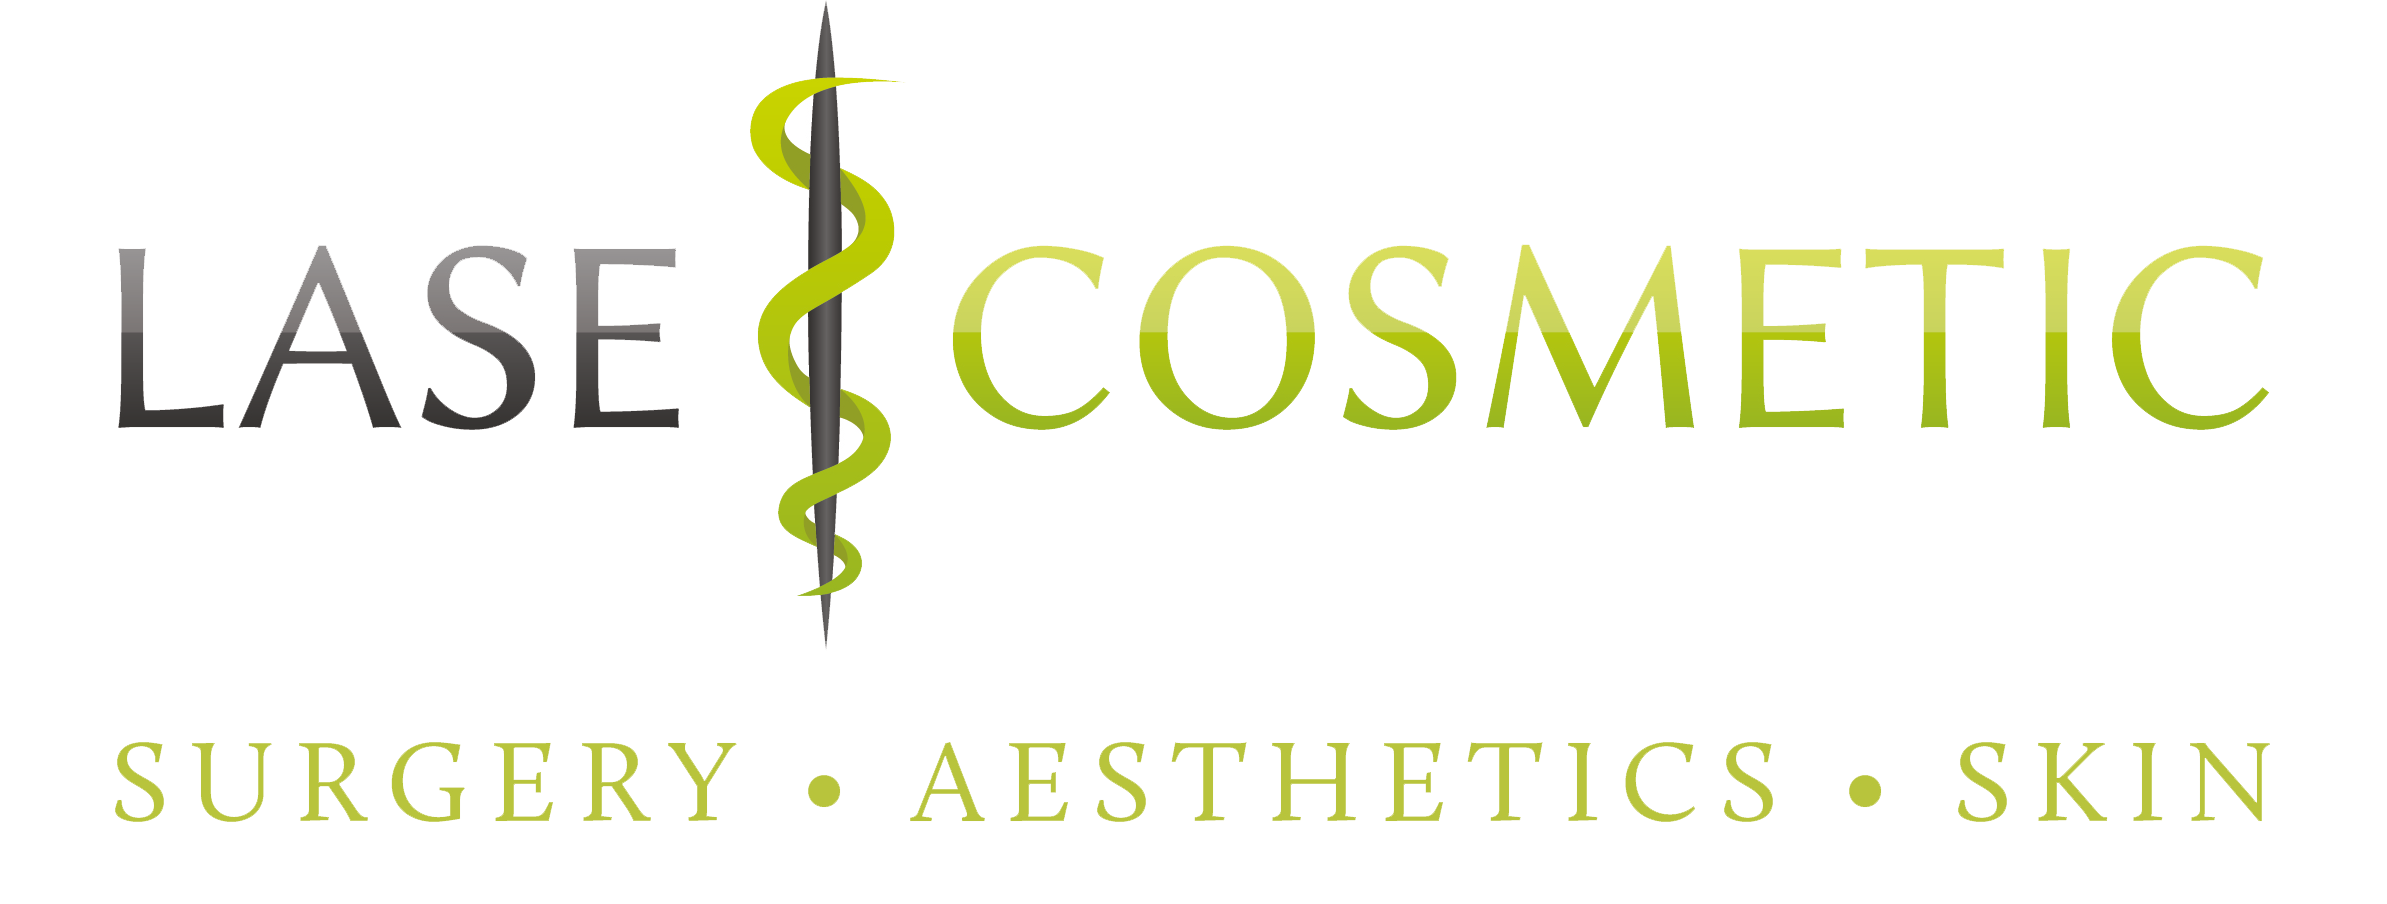 lase-cosmetic-logo